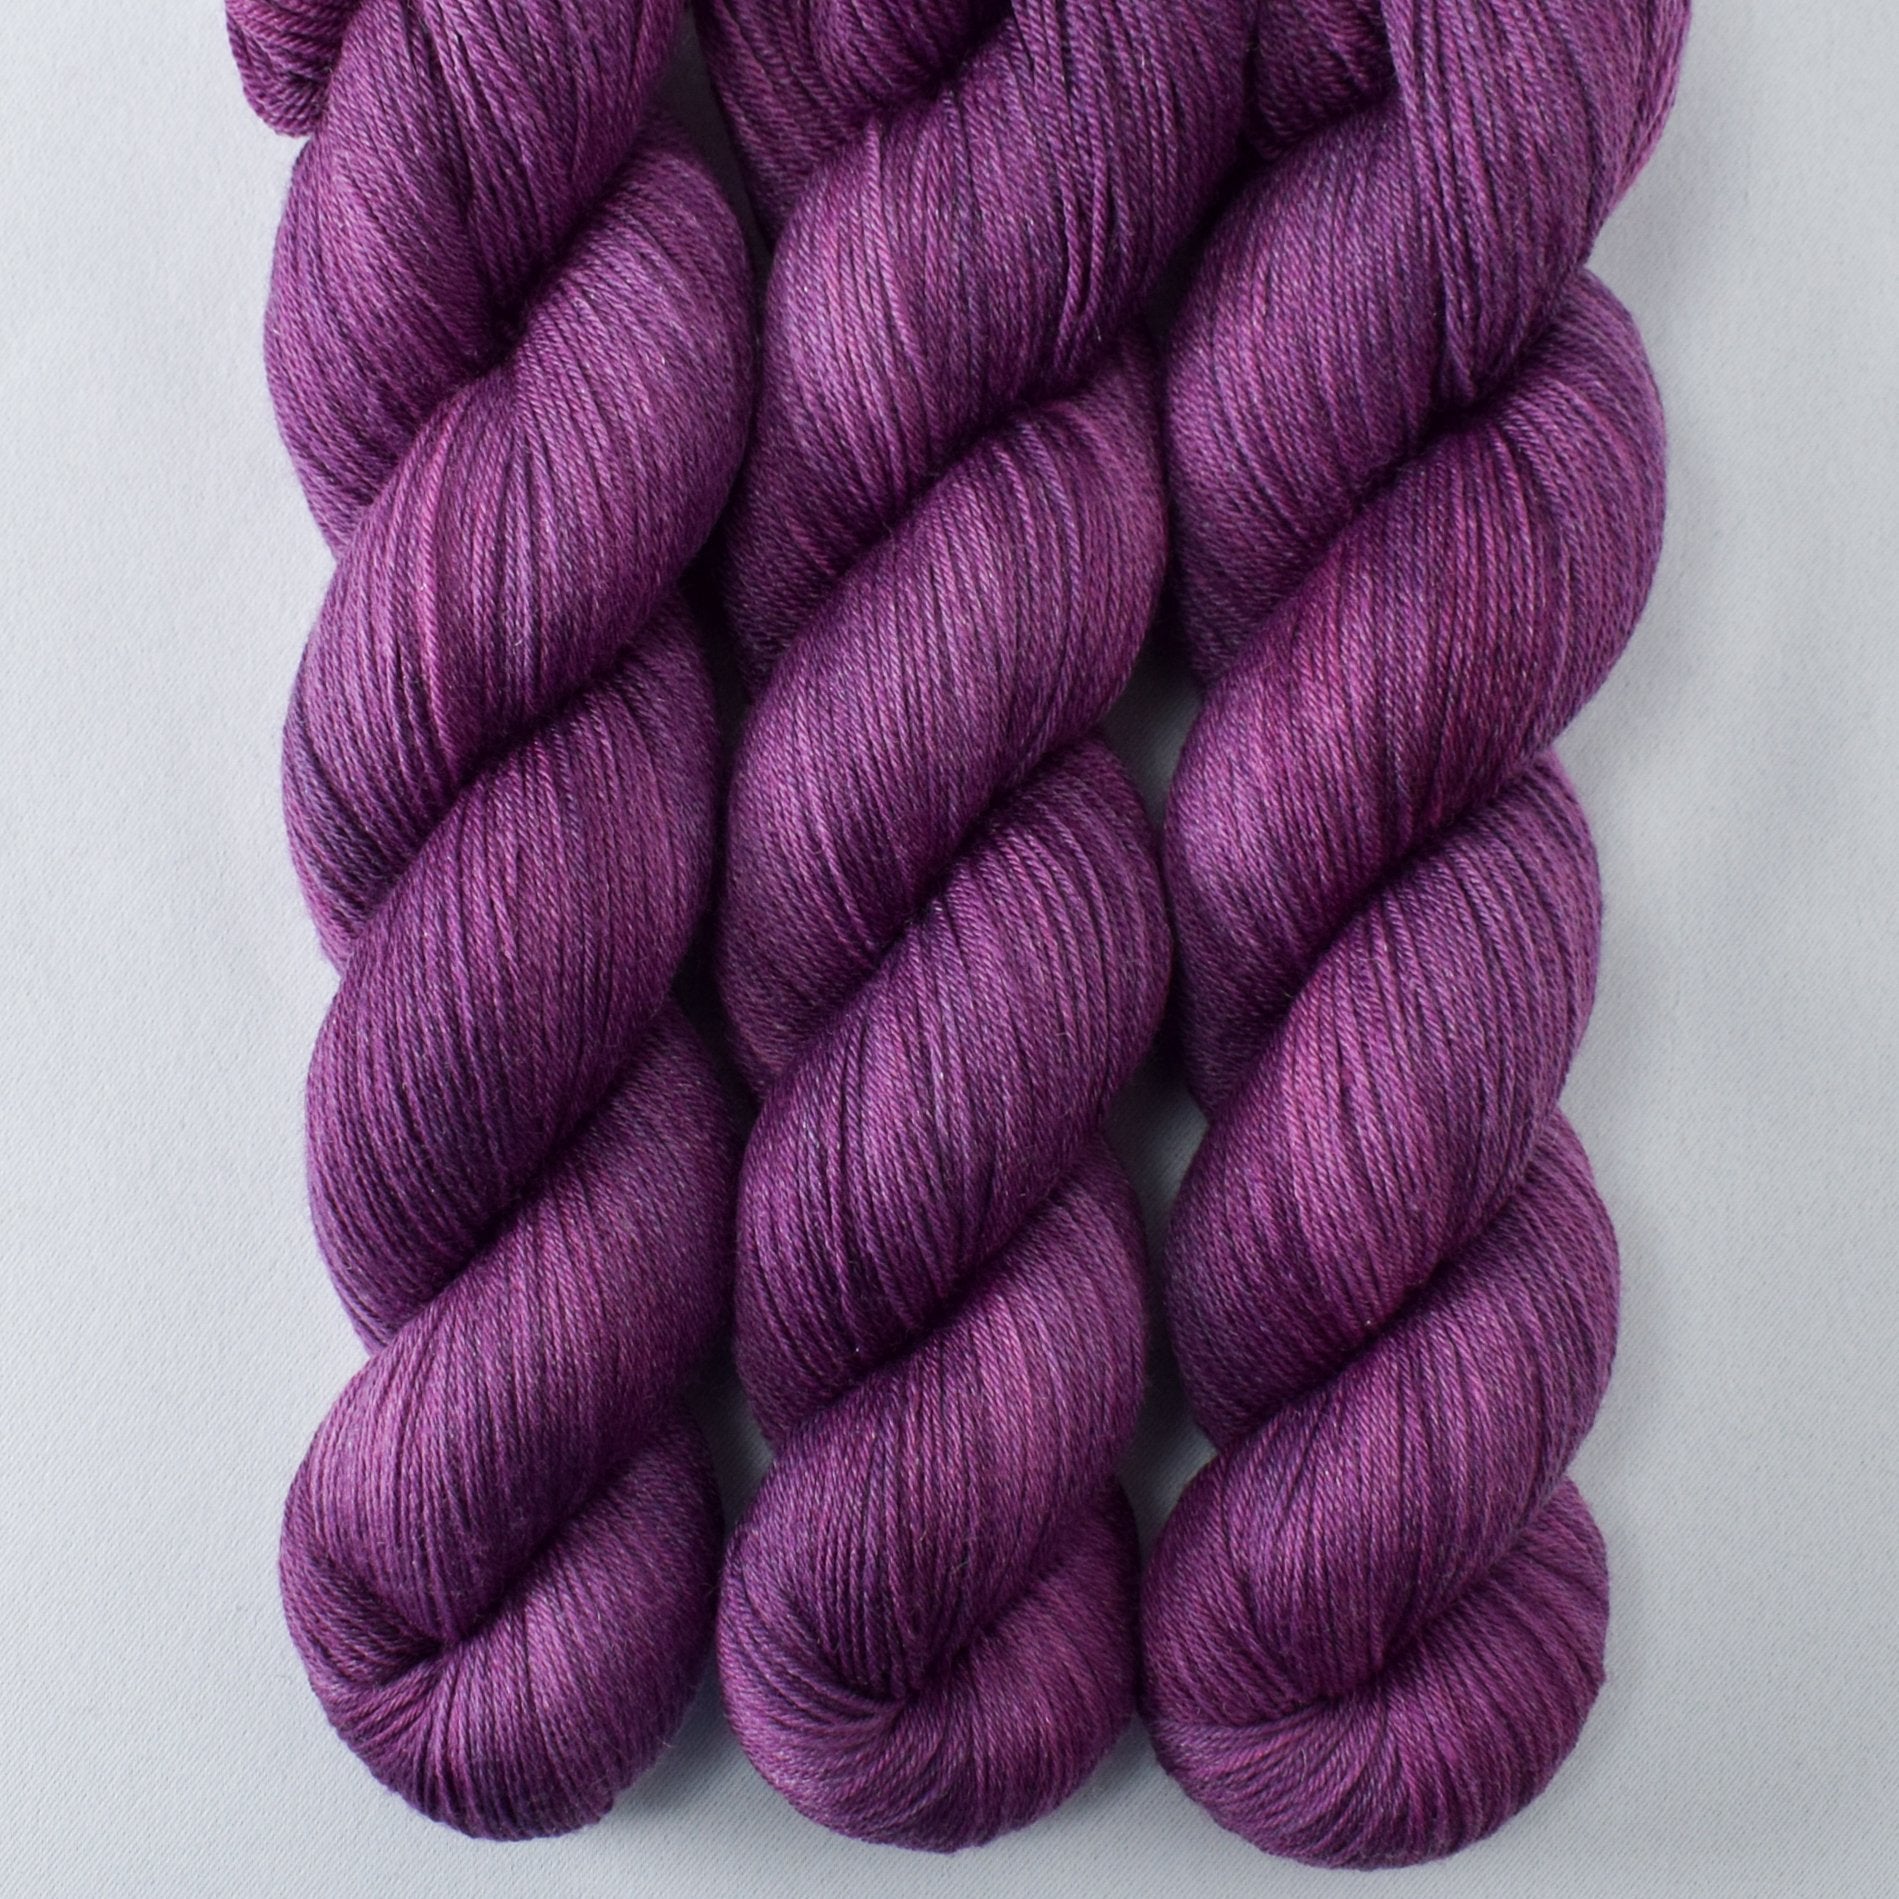 Sangria - Miss Babs Tarte yarn